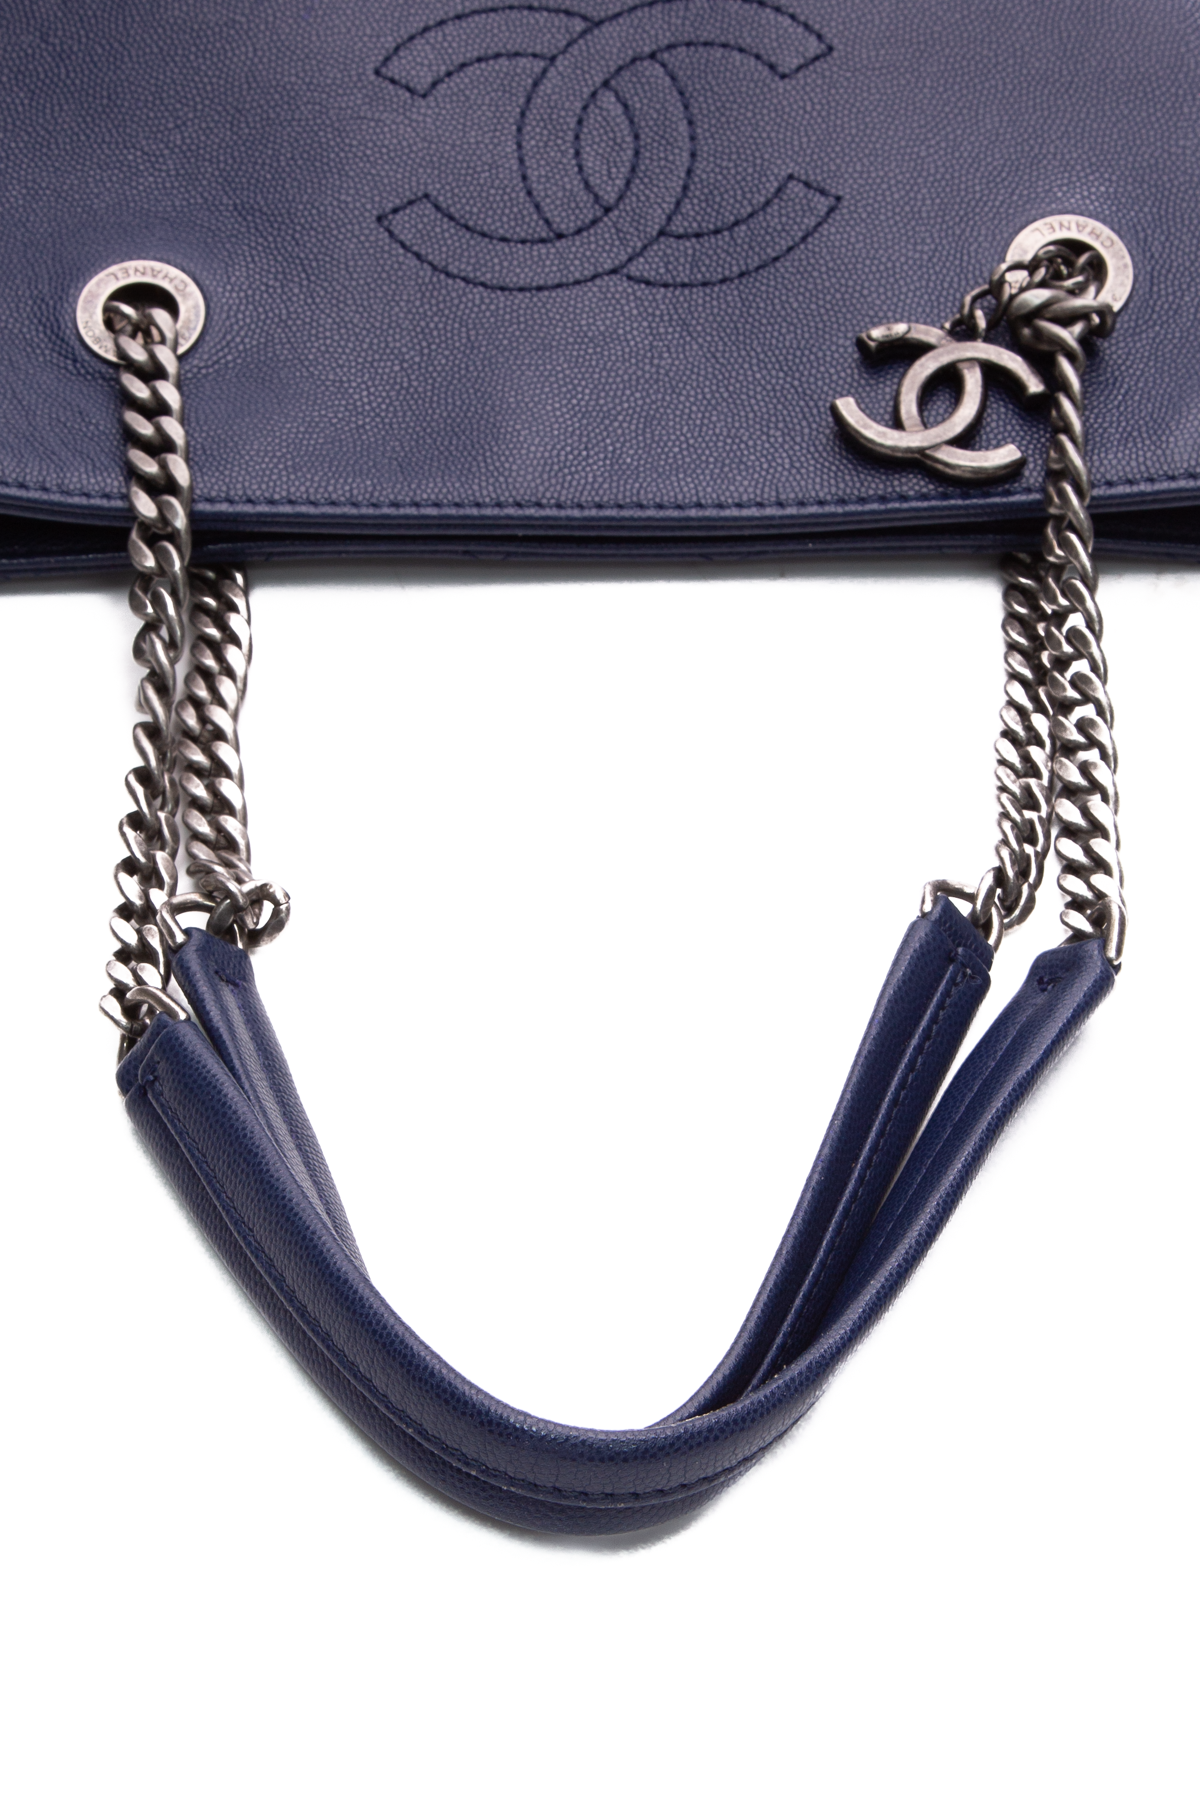 Chanel Urban Delight Tote Bag - Couture USA